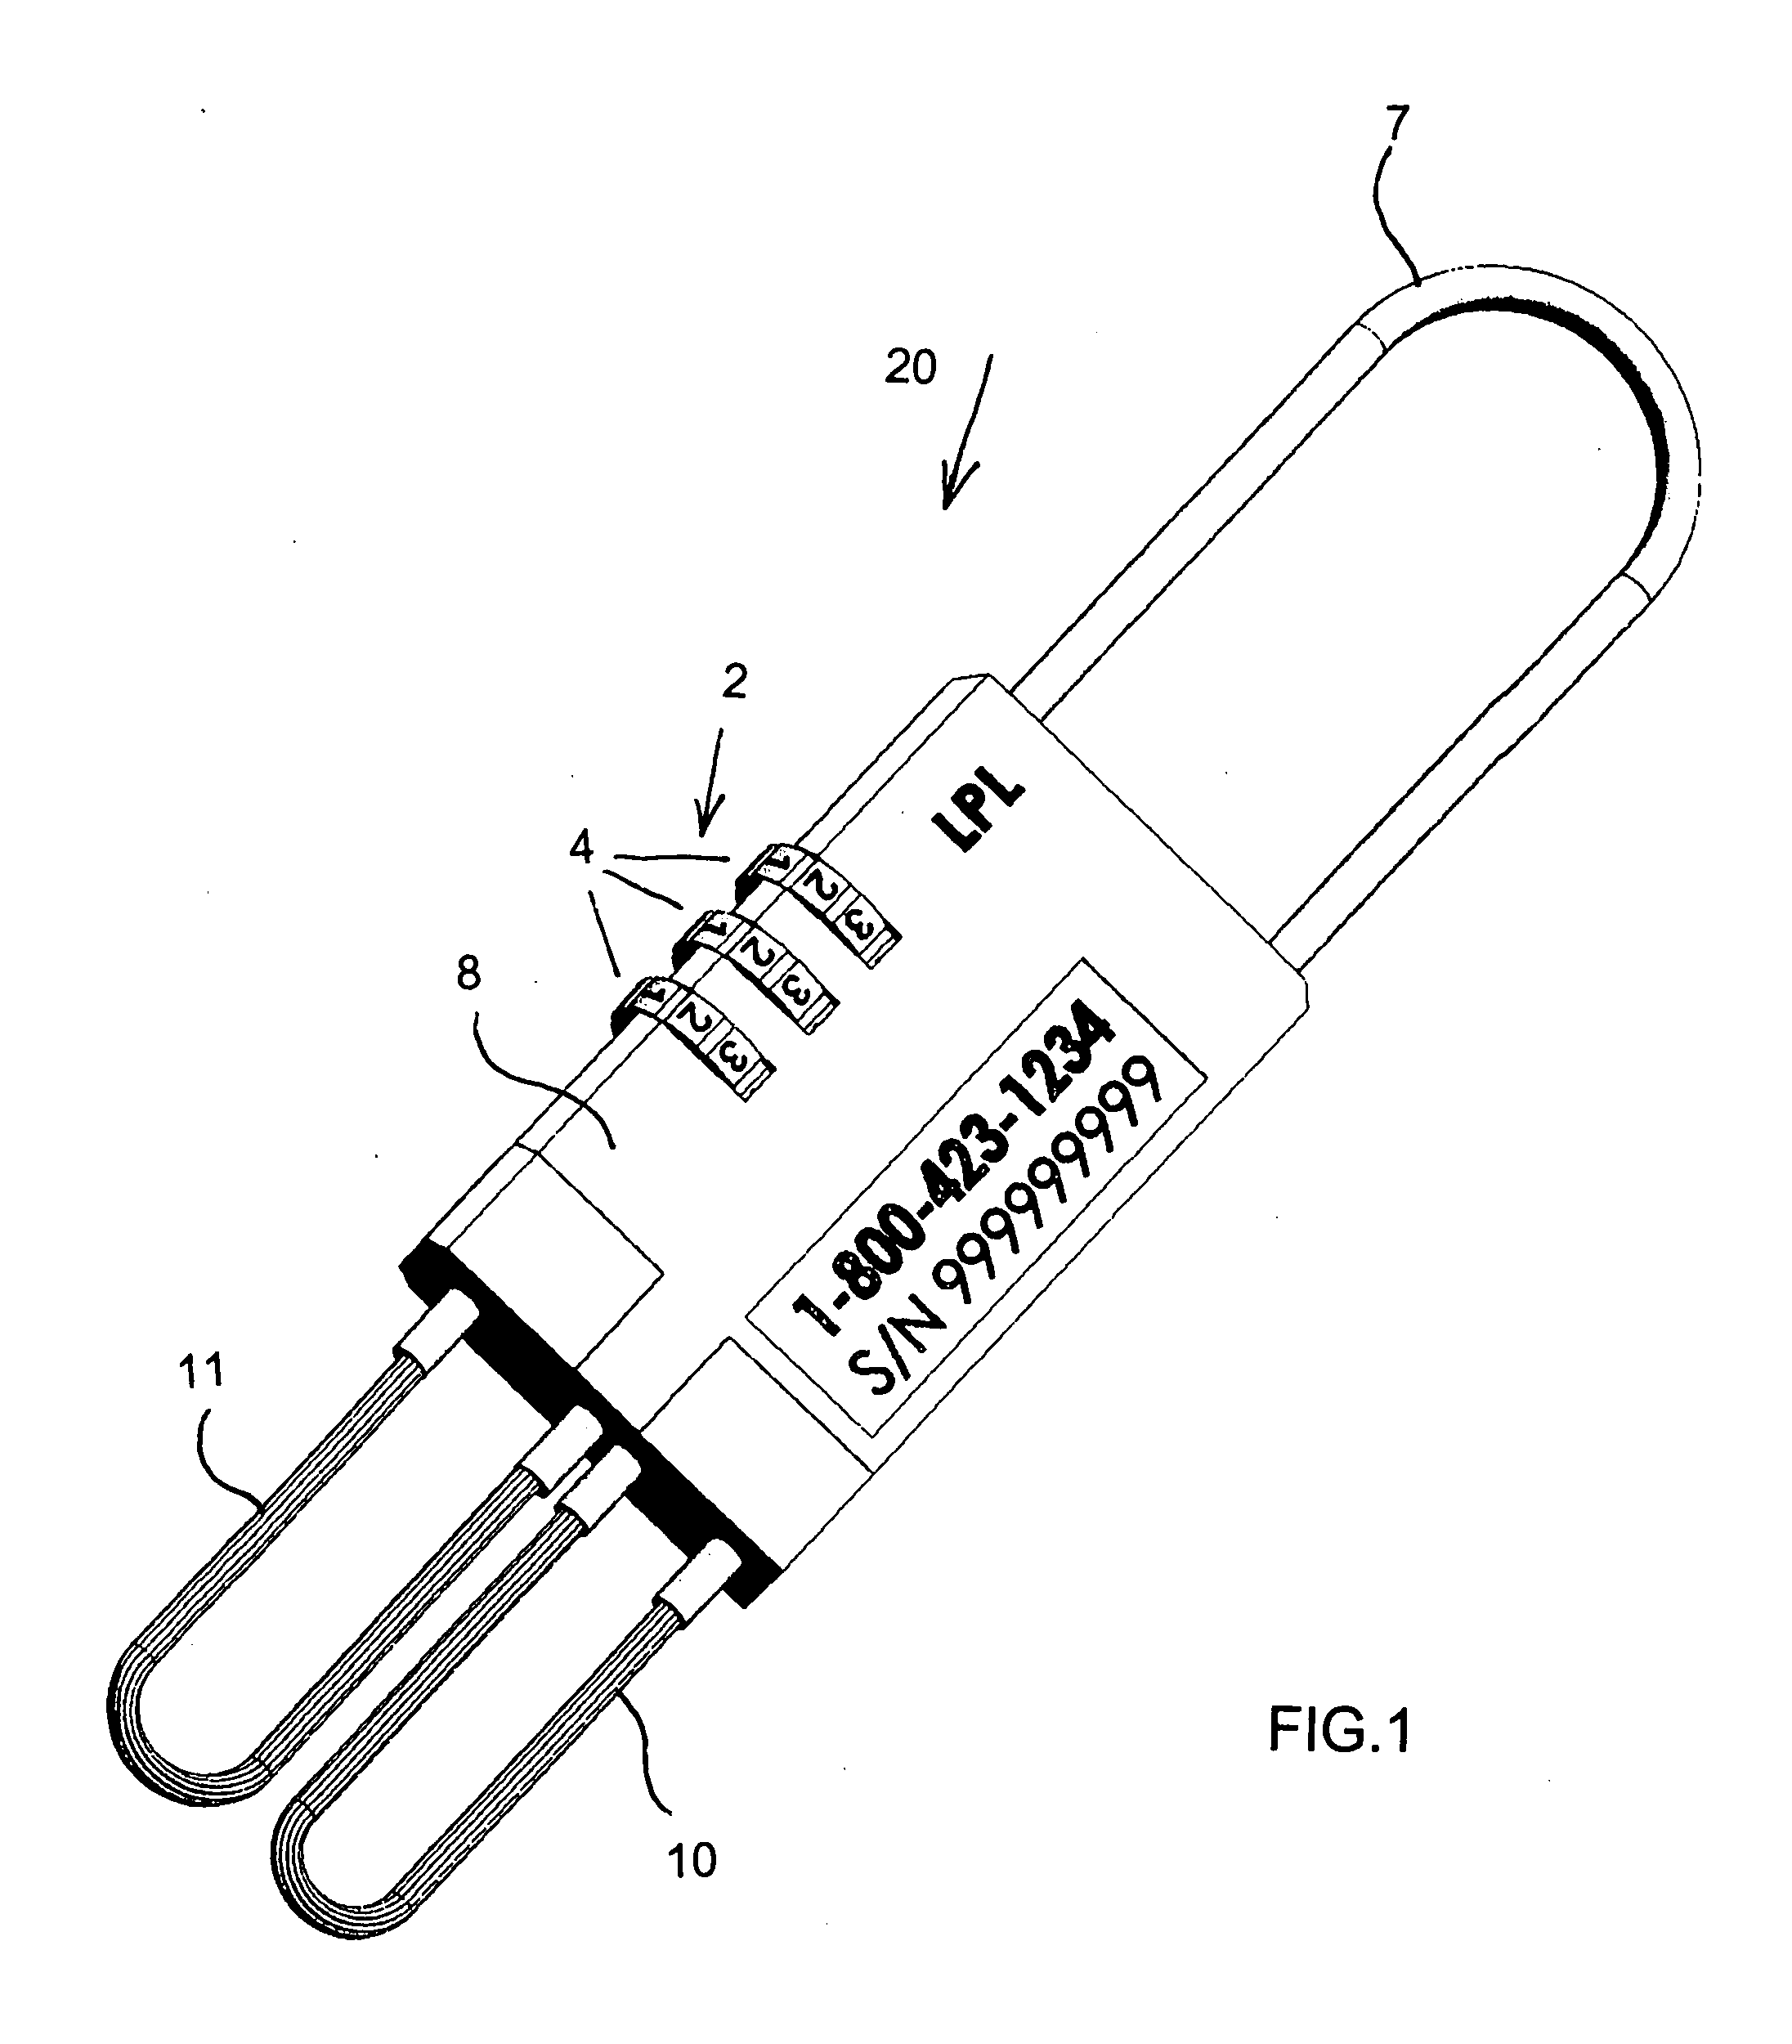 Multi-shackle lock and method of using the multi-shackle lock